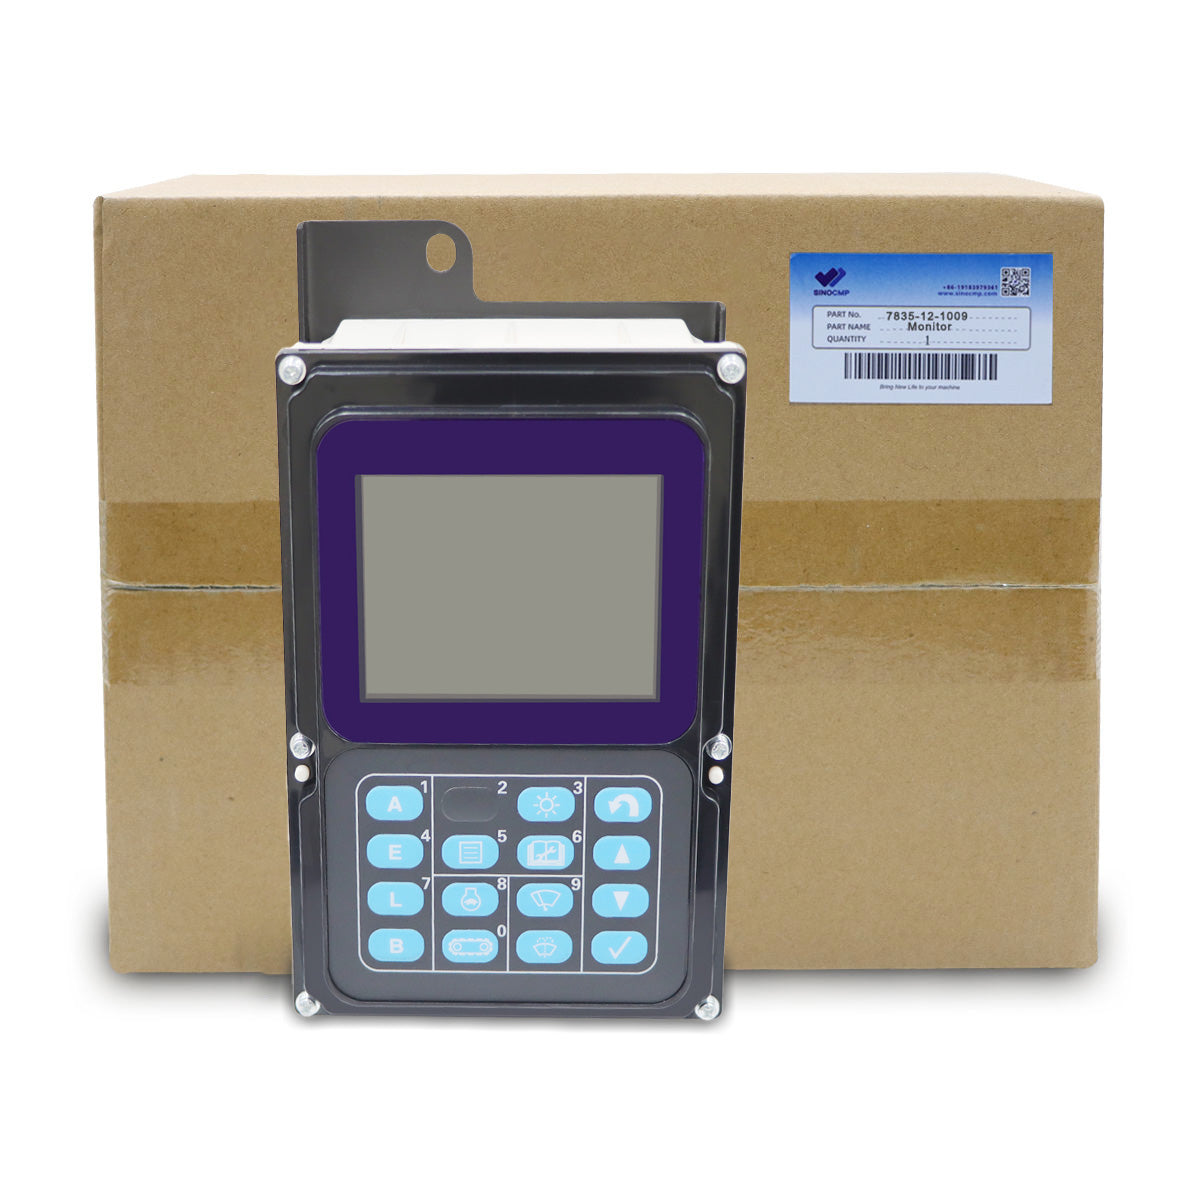 7835-12-1009 7835-12-1010 Monitor Display Panel for Komatsu PC200-7 PC220-7 PC300-7 - Sinocmp